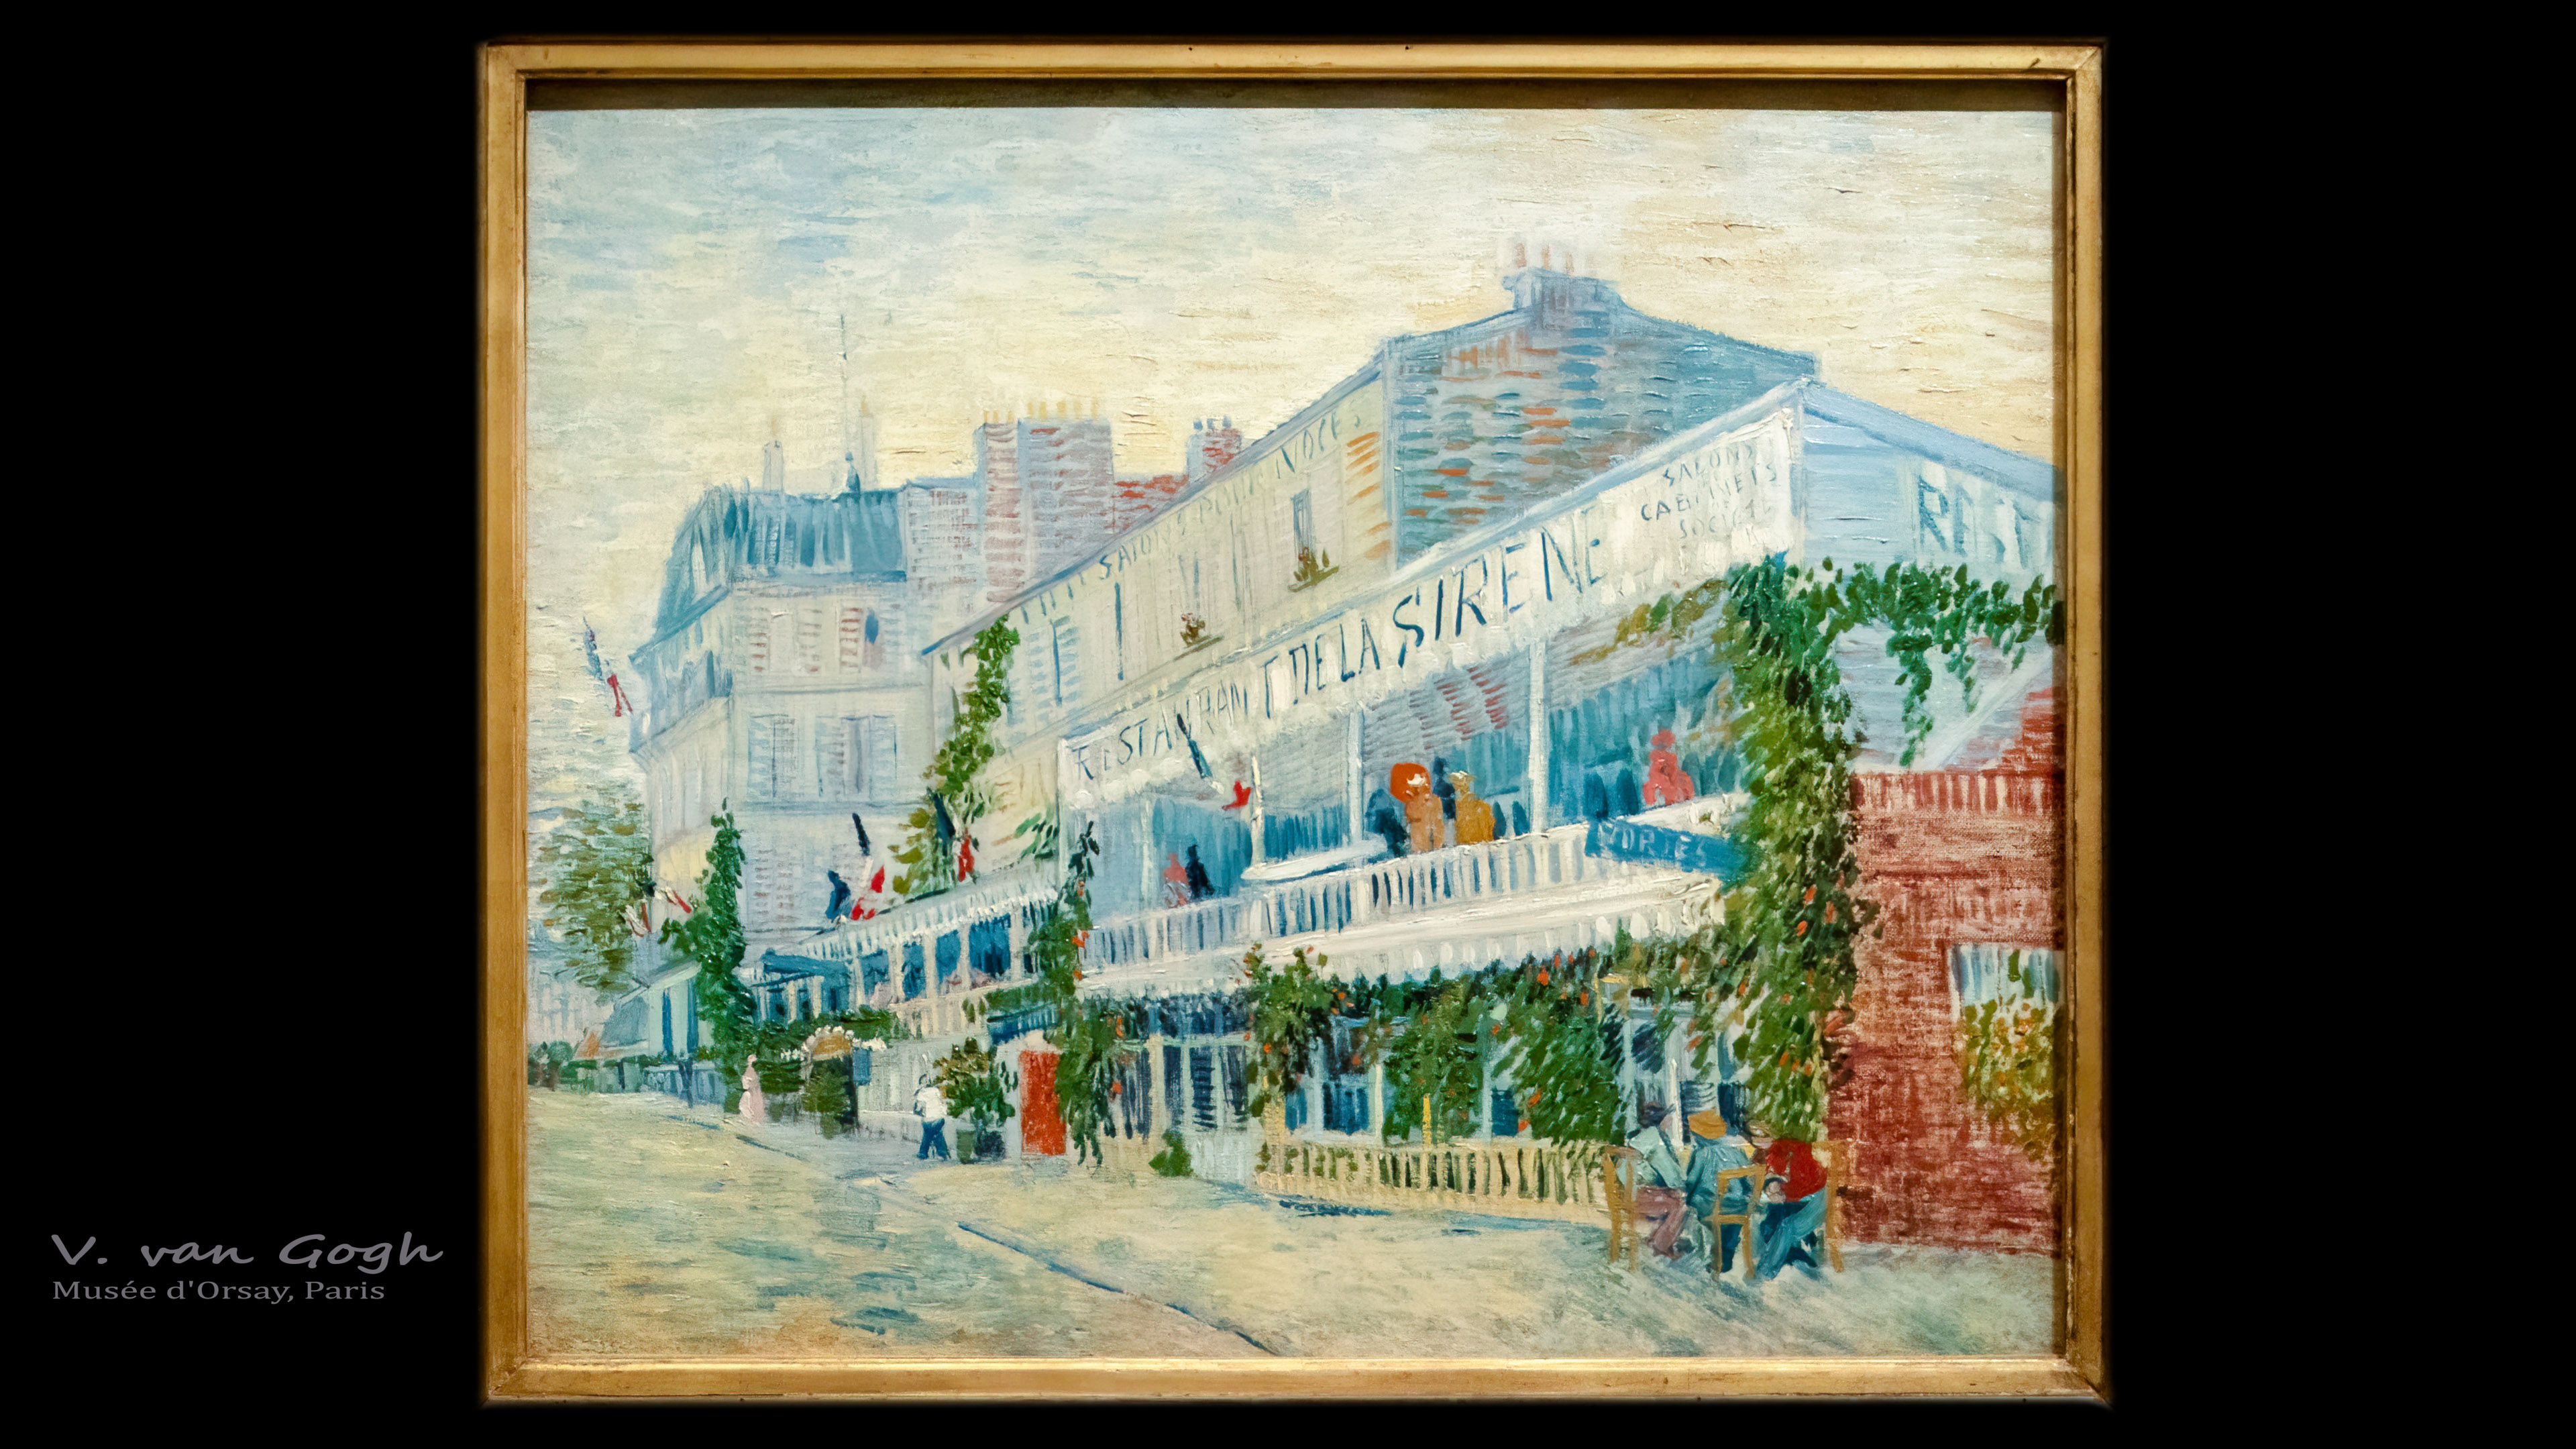 Indulge in the enchanting nightlife depicted in The Restaurant de la Sirène at Asnières desktop wallpaper, where Van Gogh's art comes alive.